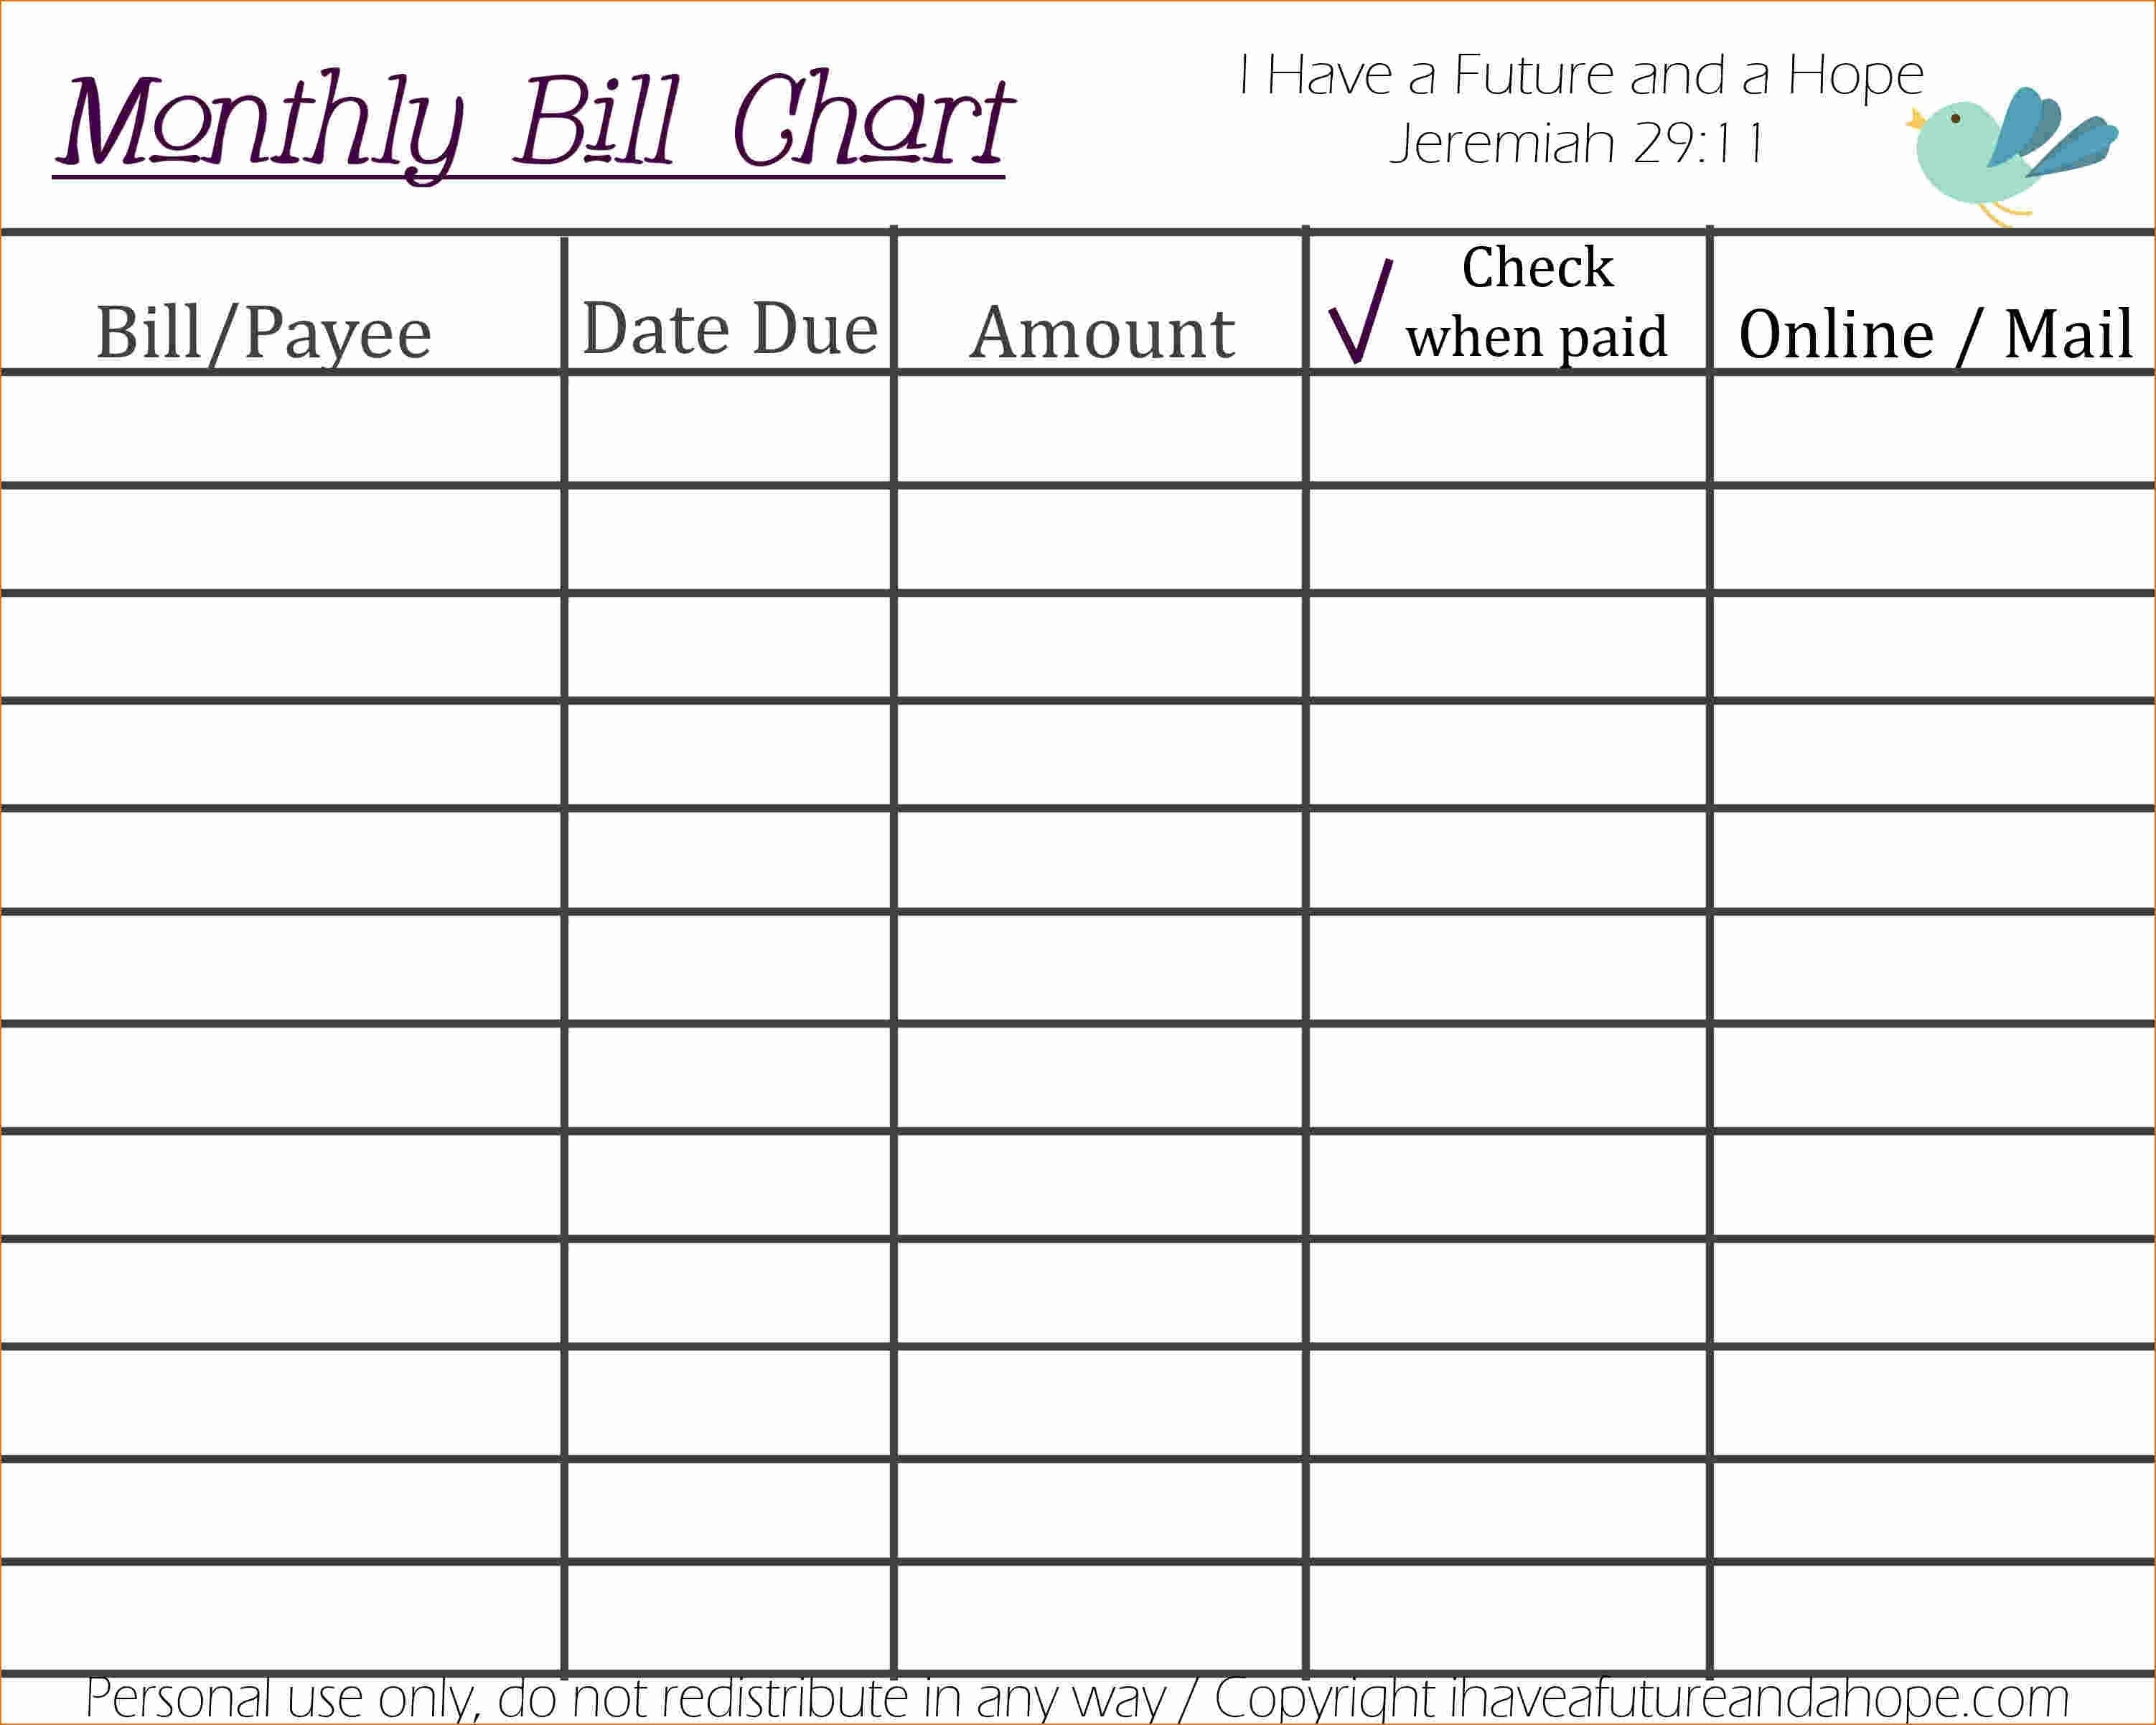 Printable Bill Organizer Calendar - Yeniscale.co  Calendar To Print For Bills